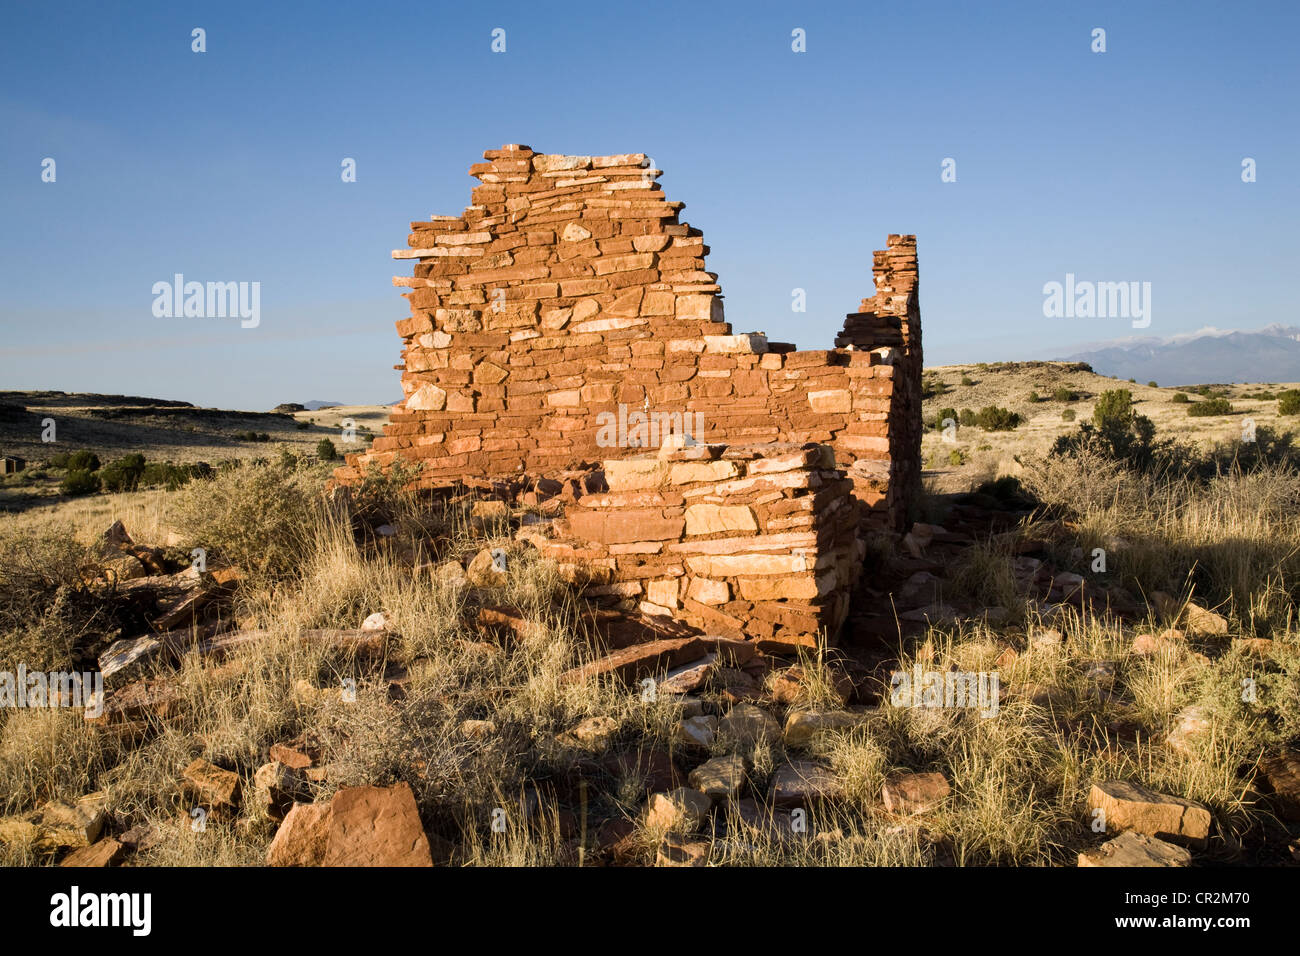 The sandstone walls of Box Canyon pueblo at Lomaki Ruins in Wupatki National Park, Arizona, just below the San Francisco Peaks. Stock Photo